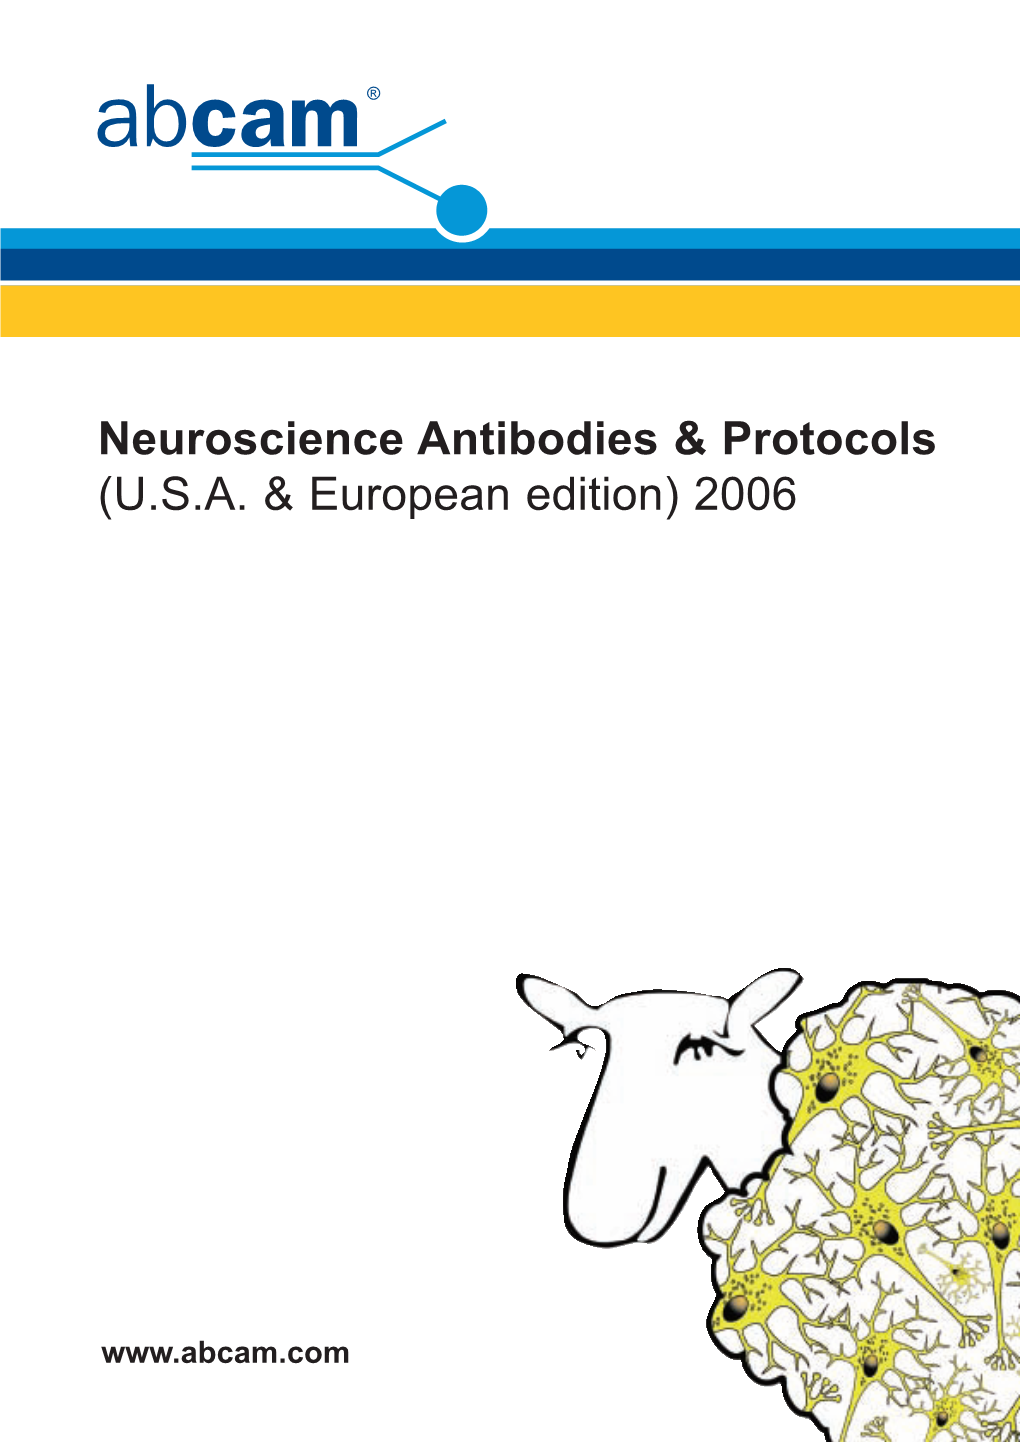 Neuroscience Antibodies & Protocols (USA & European Edition) 2006